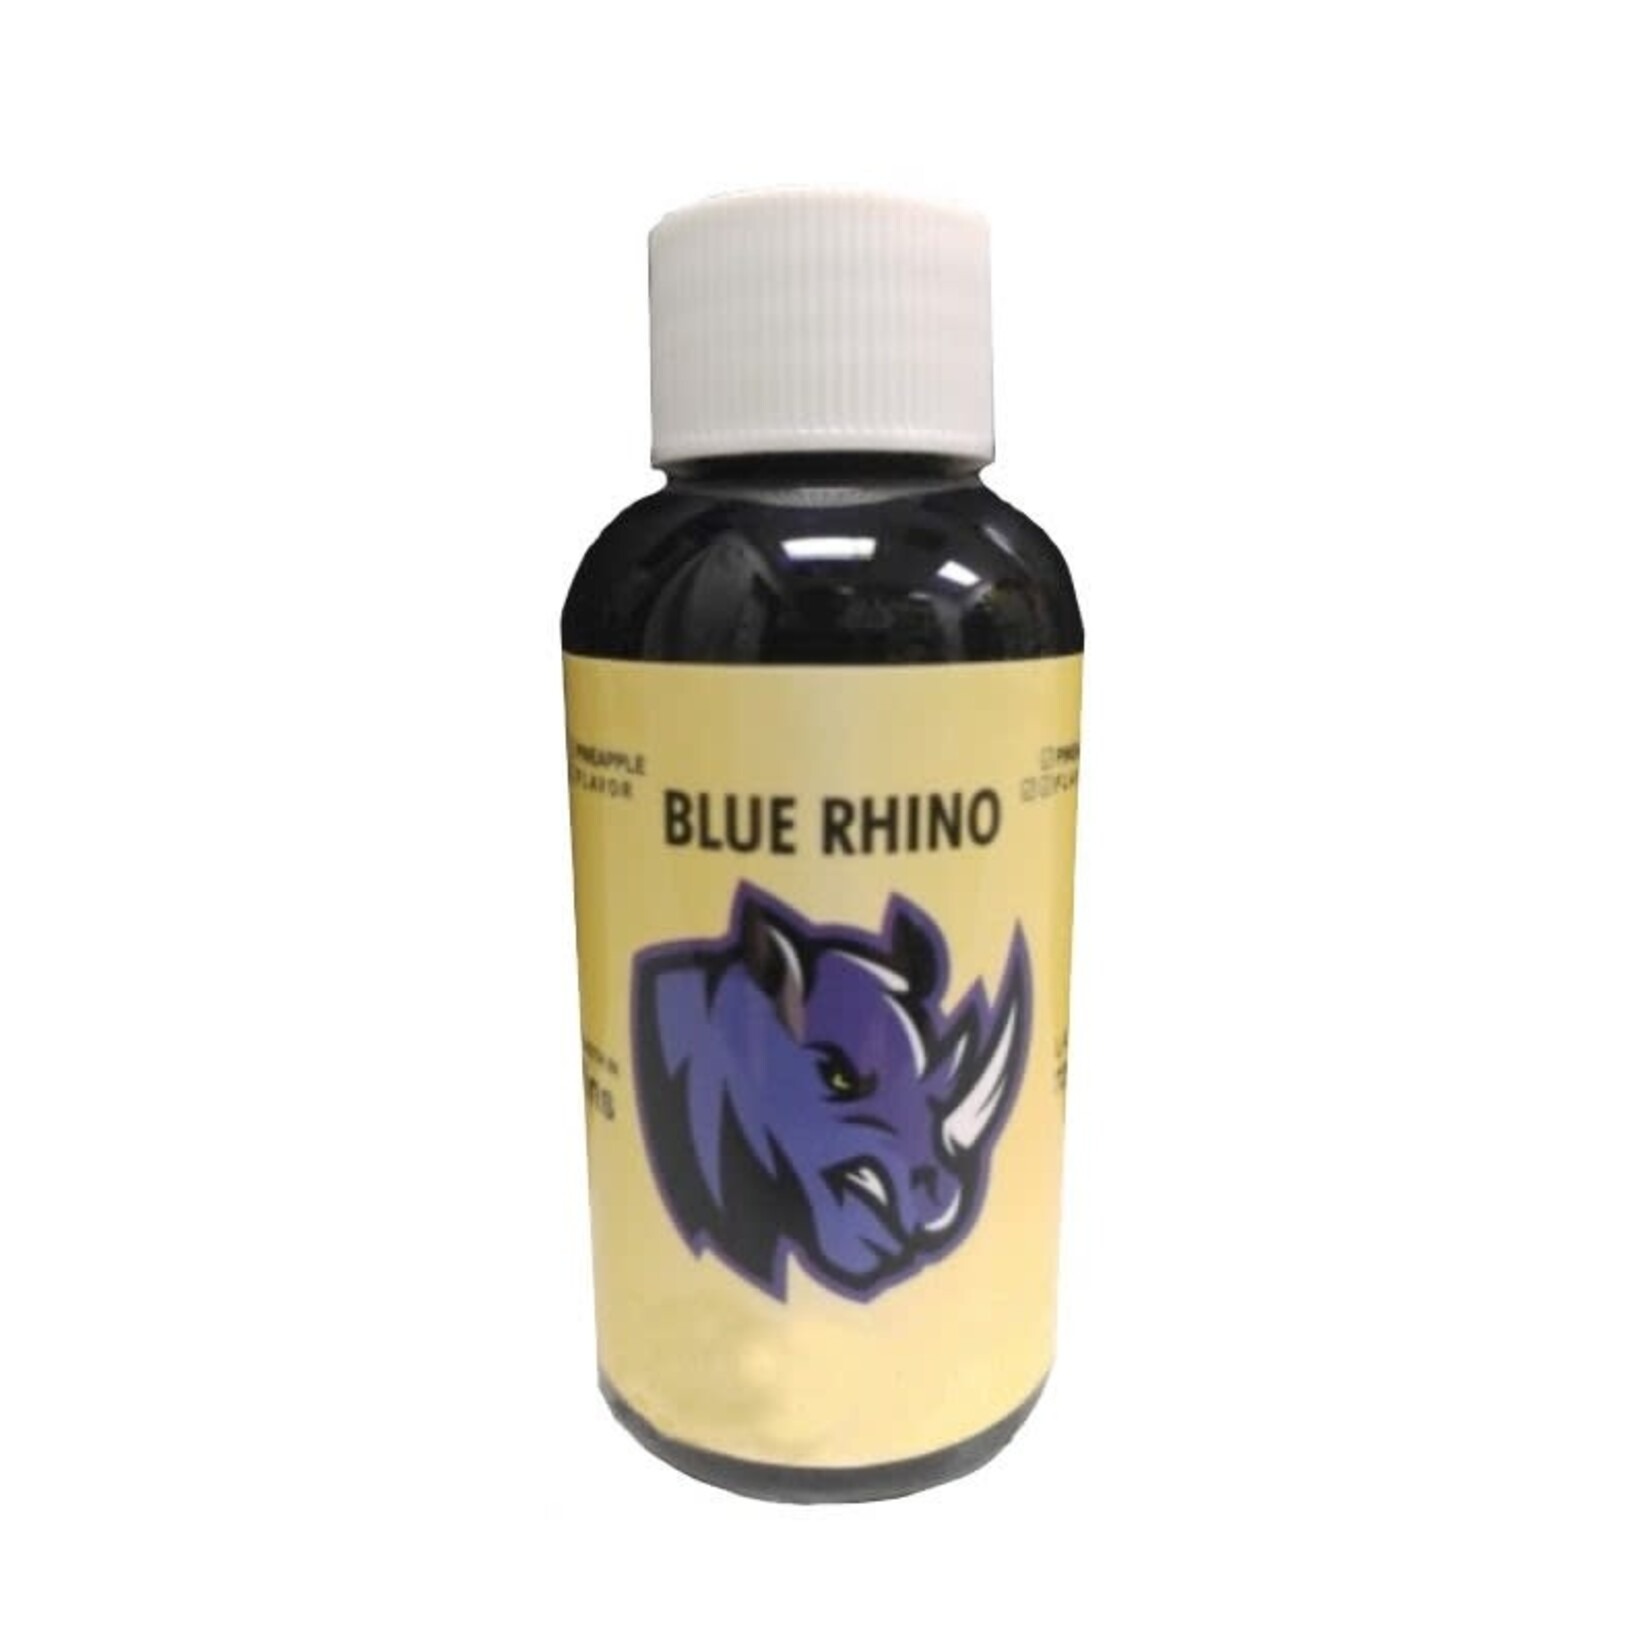 Blue rhino Blue Rhino - Male Enhancement Drink 2oz